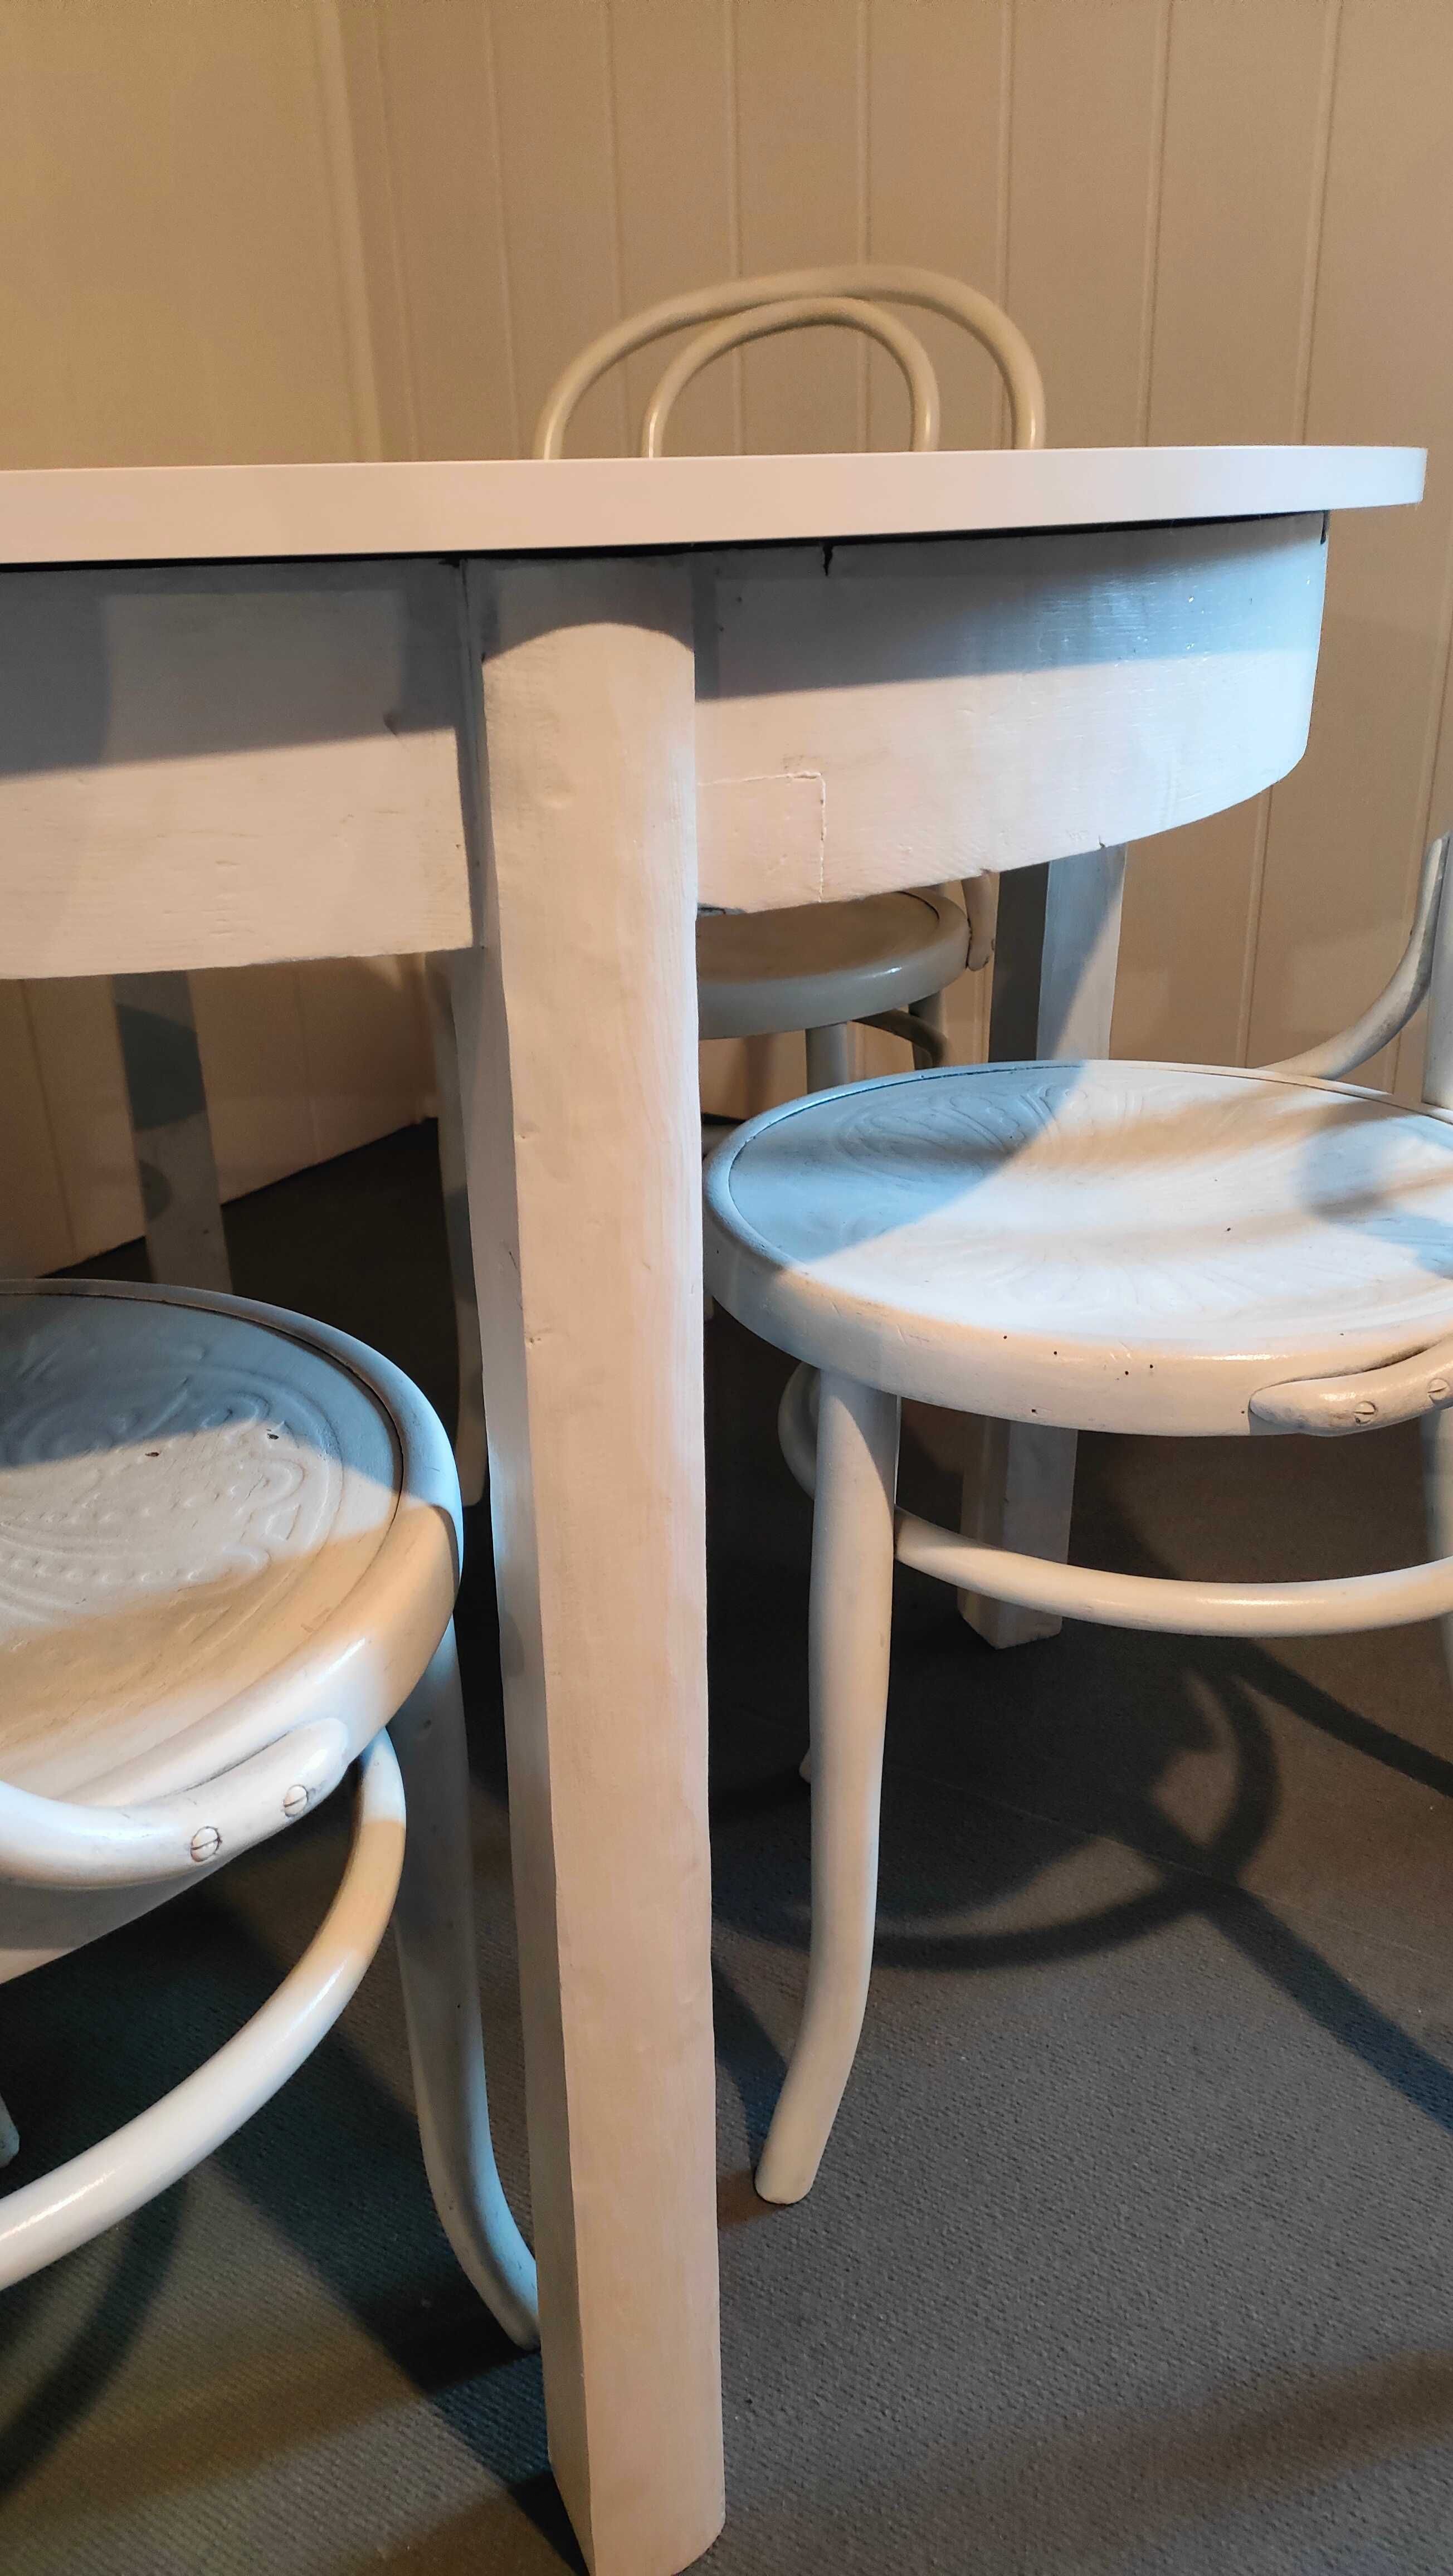 Komplet stół i krzesła